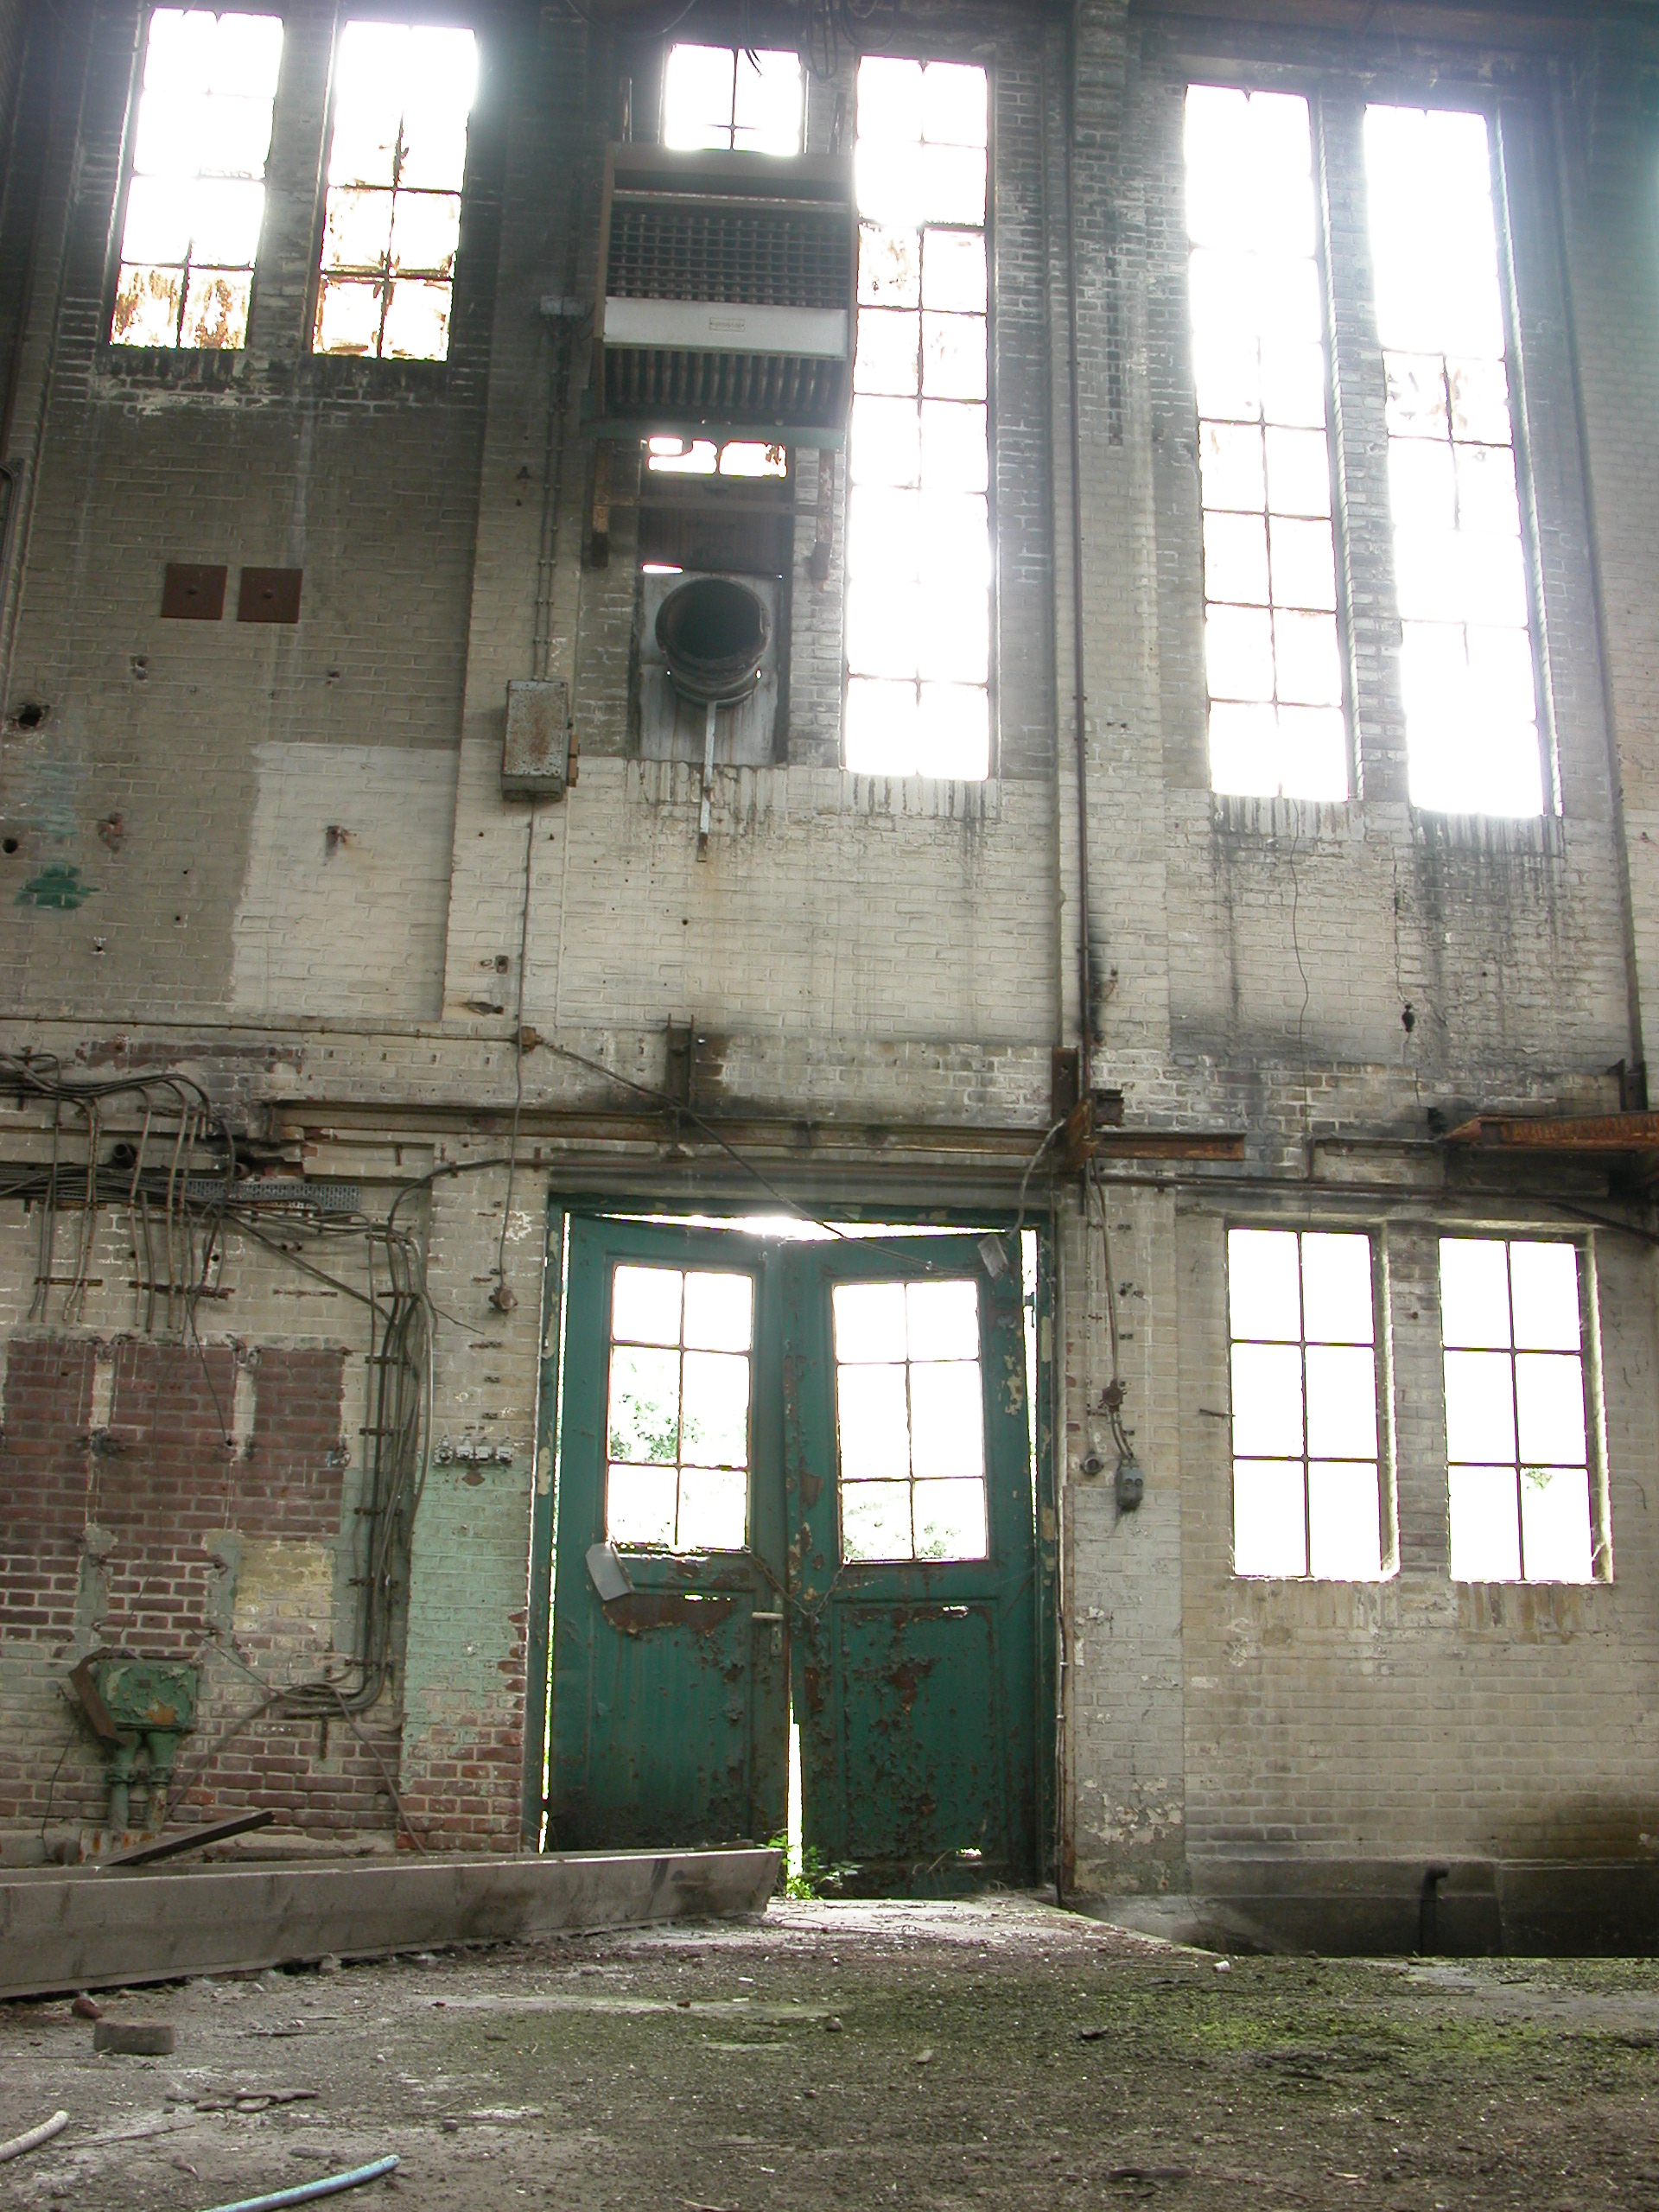 architecture interiors abandoned factory wall walls door entrance window windows